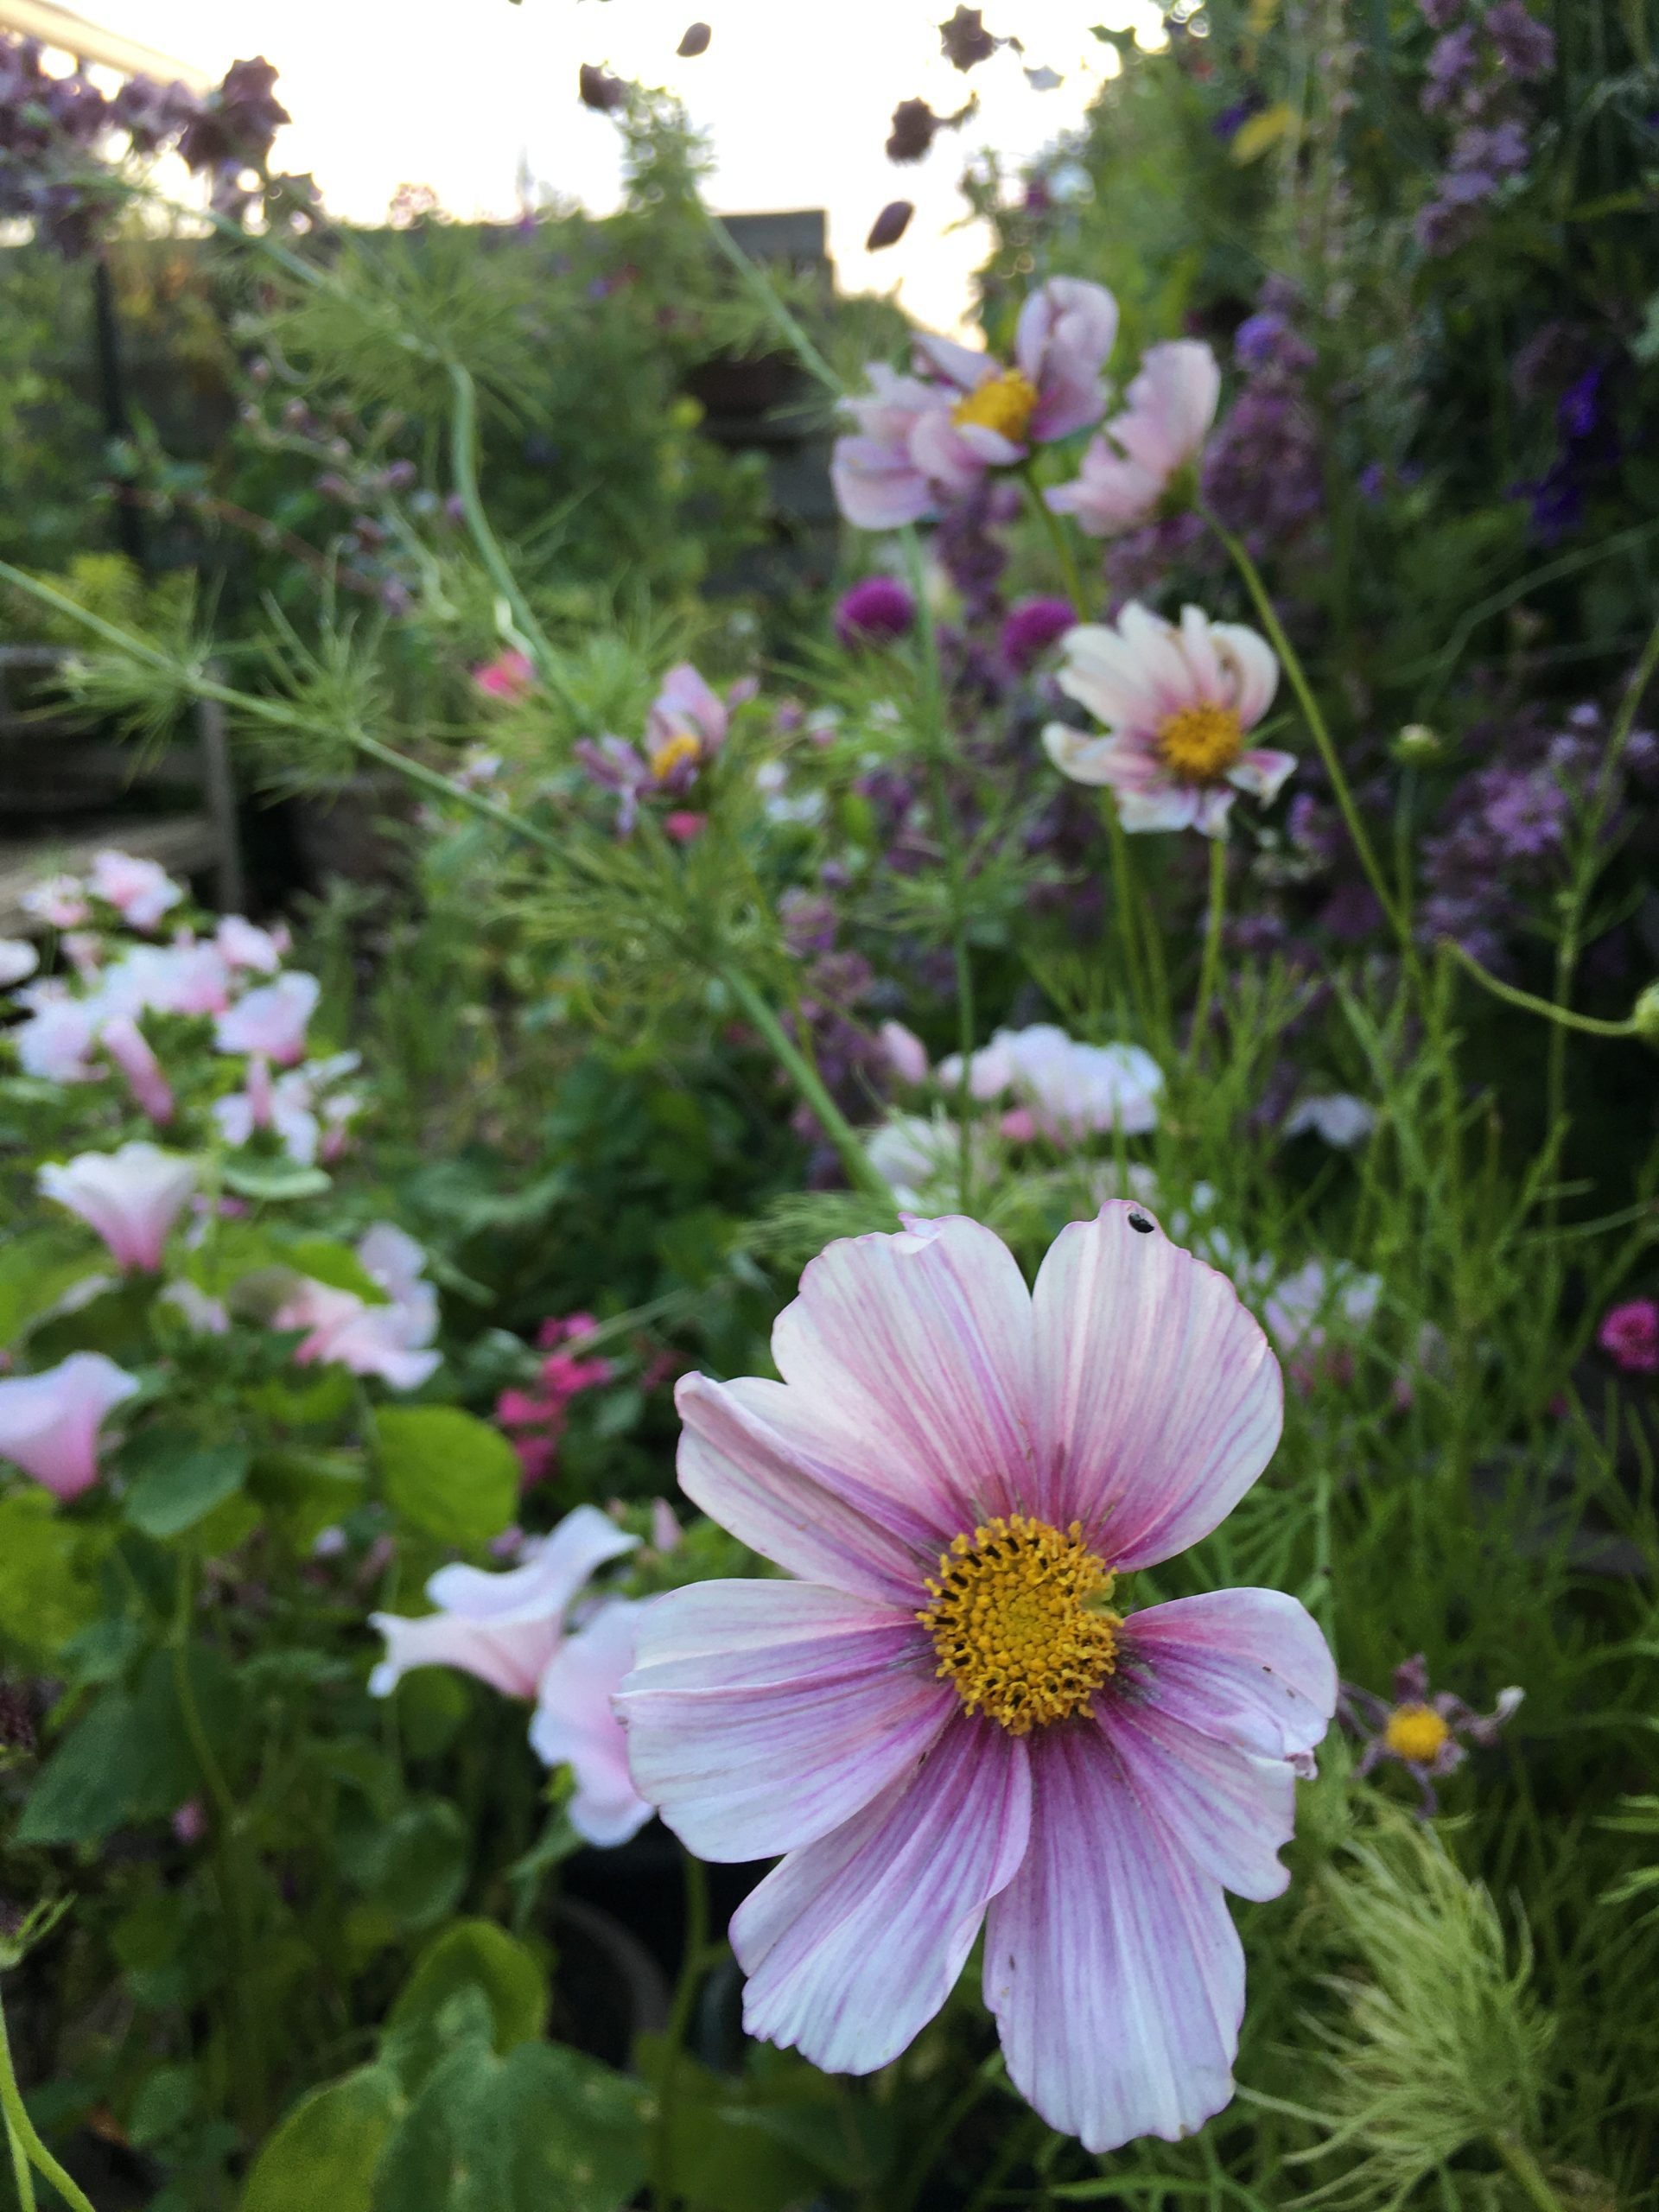 Stolt kavaler cosmos daydream i Krukkeriet en blomstereng på krukker i haven hos SusHaveDesign